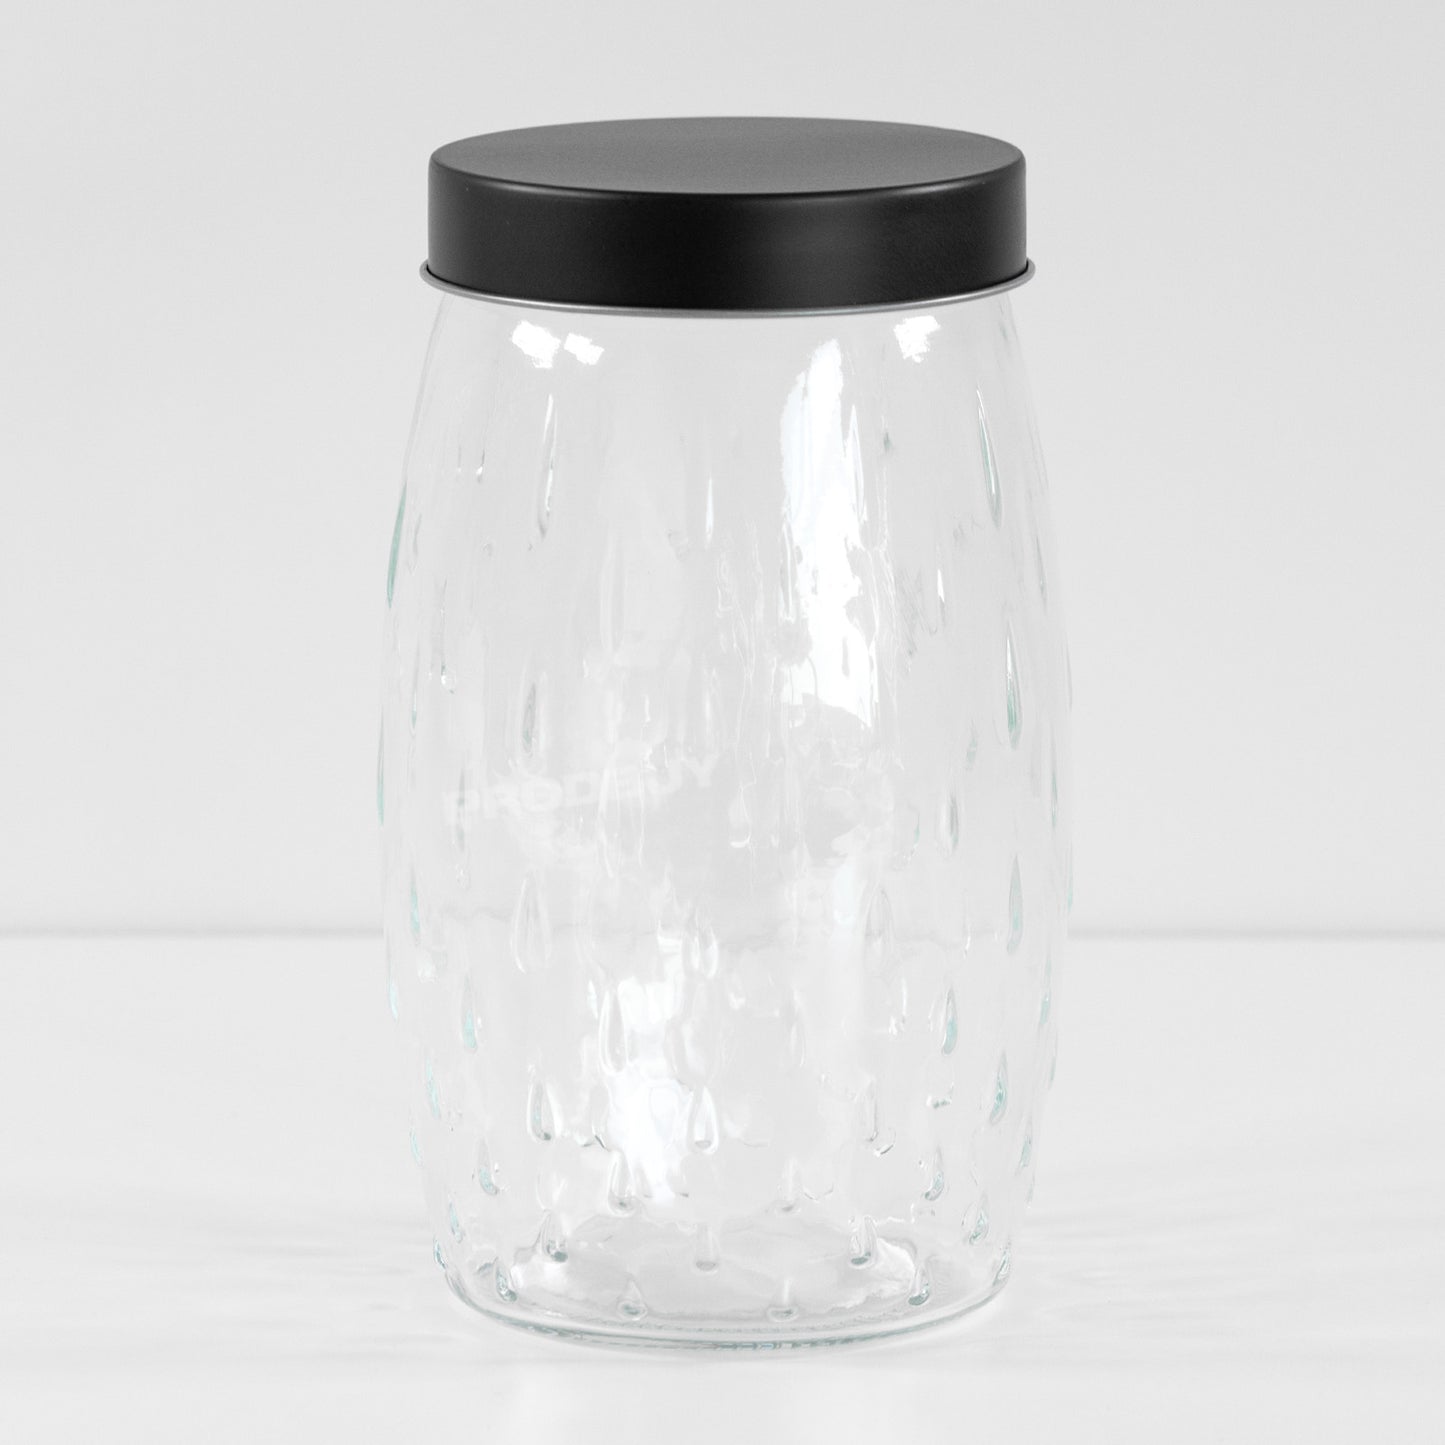 2 Litre Large Glass Storage Jar wiht a Black Screw on Lid